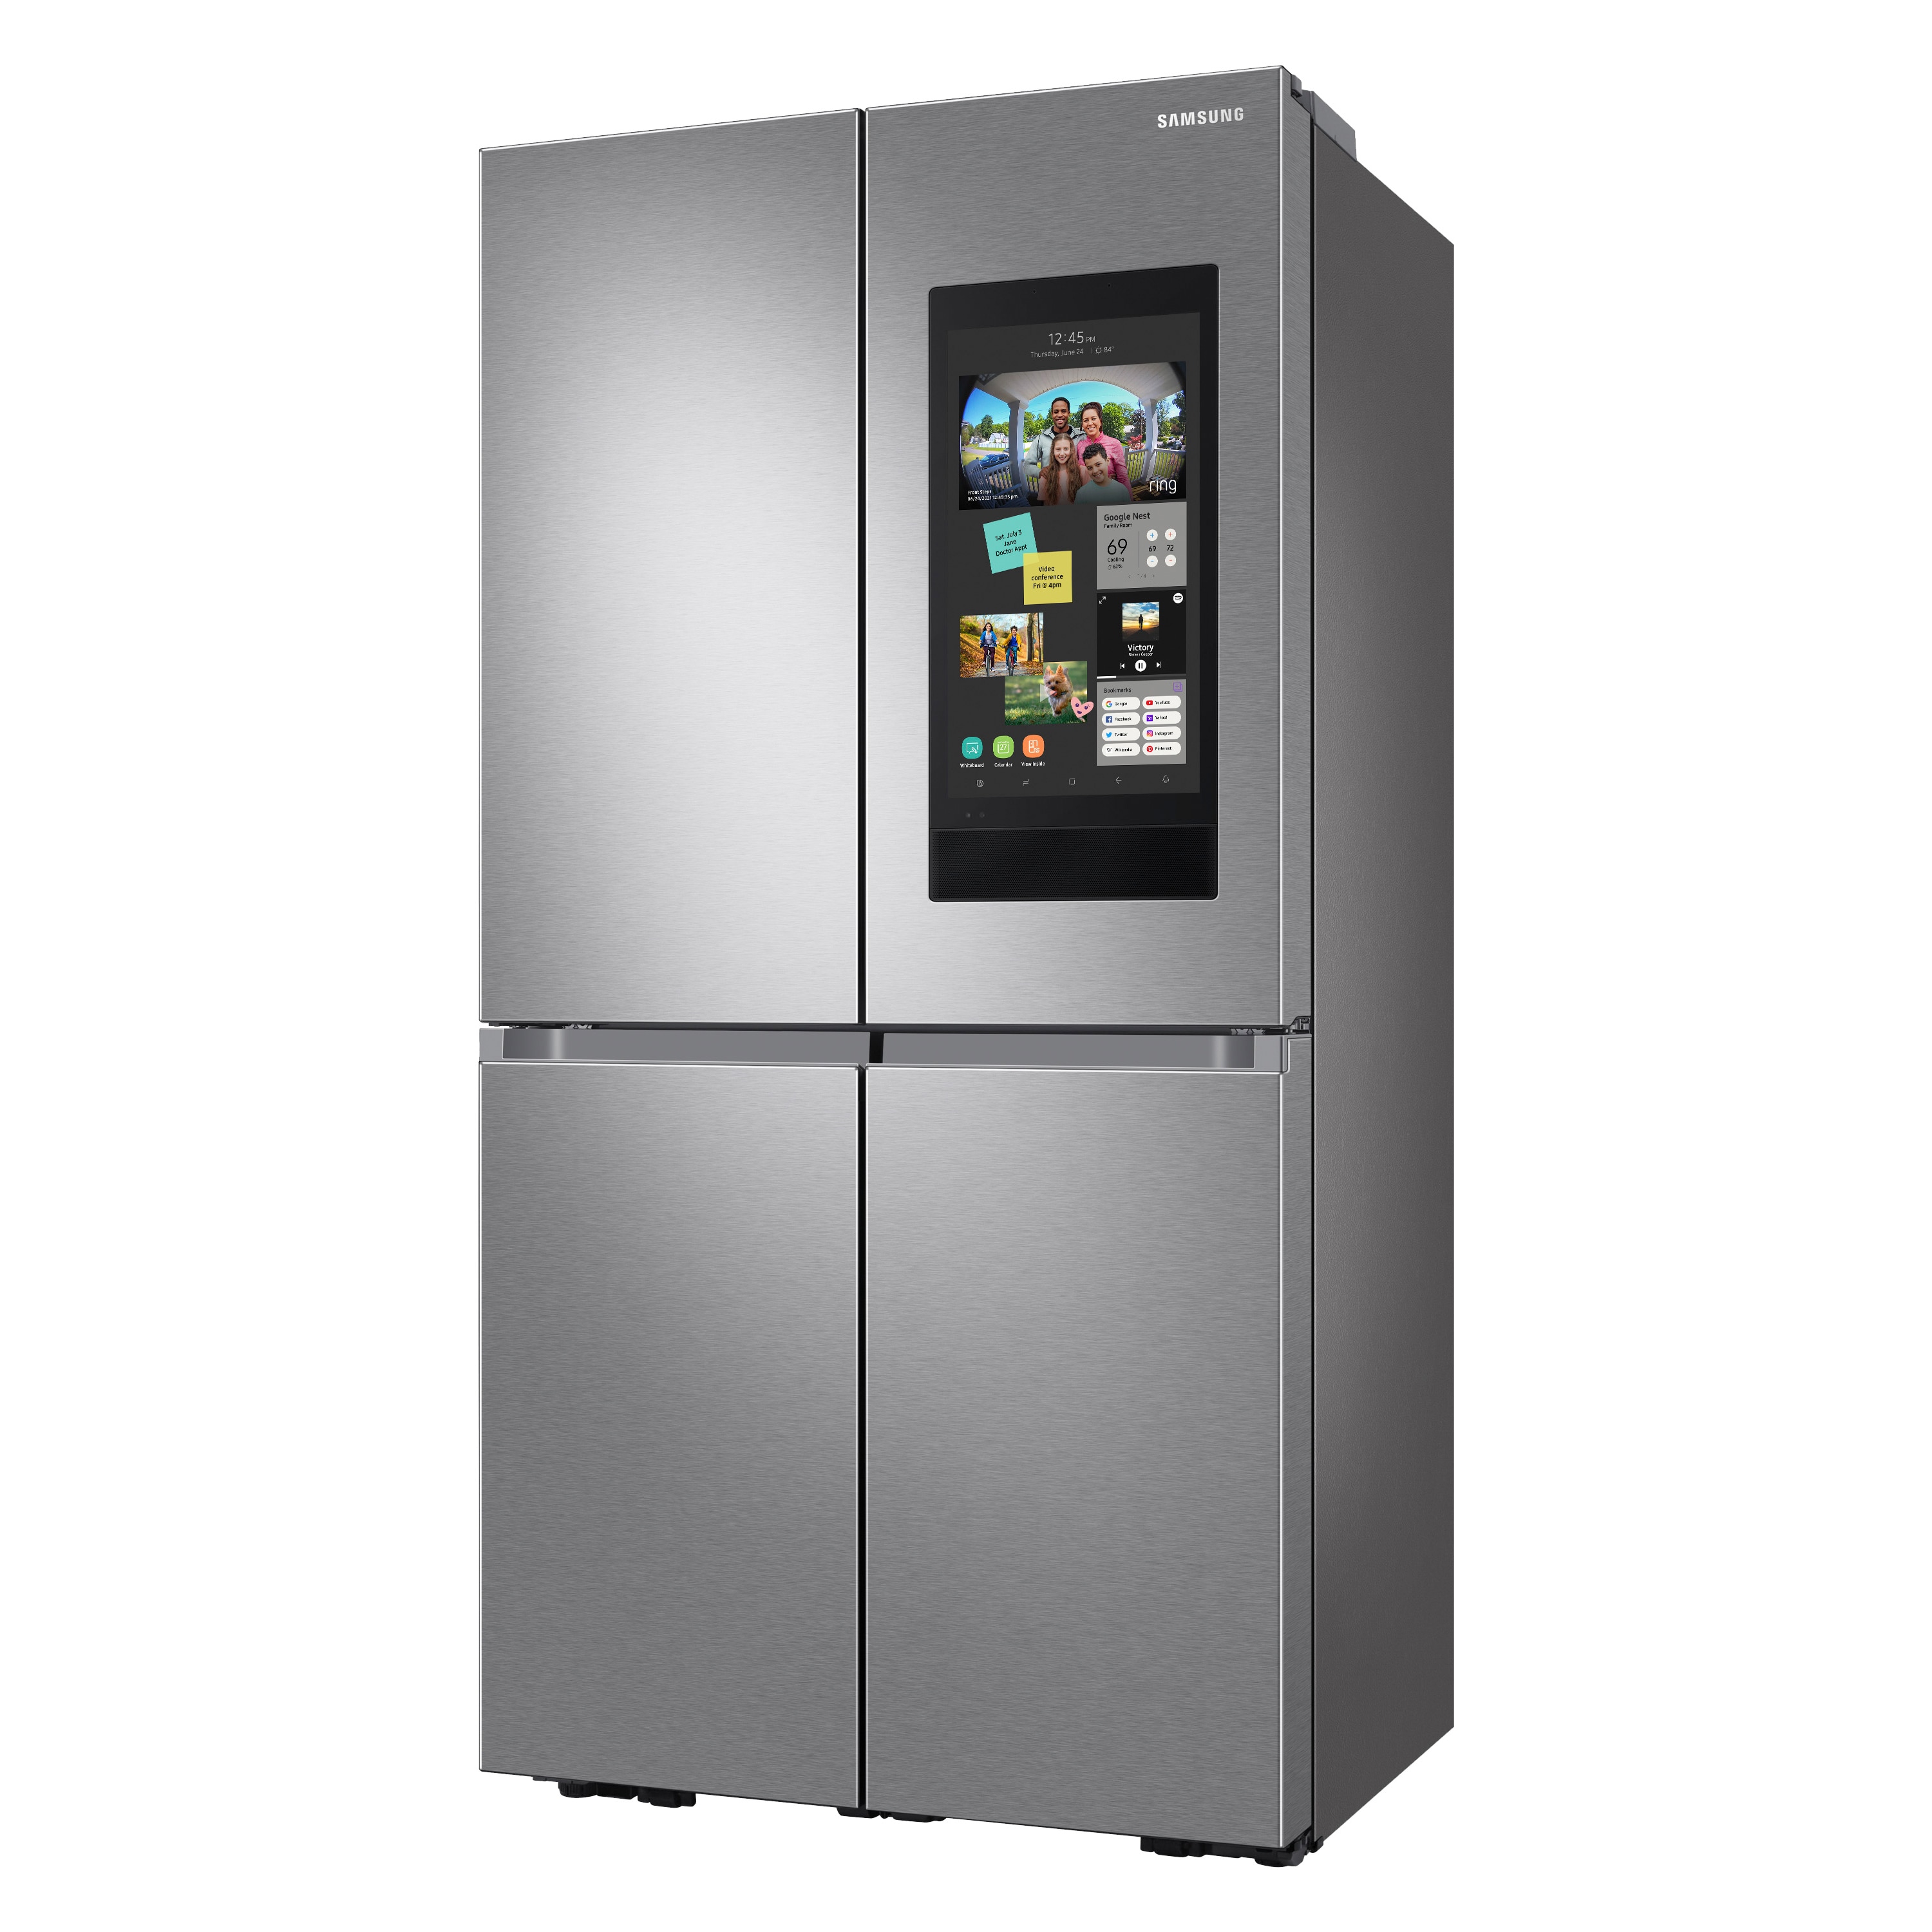 Samsung Refrigerator In-Depth Review (Model RF261BEAESR) - Prudent